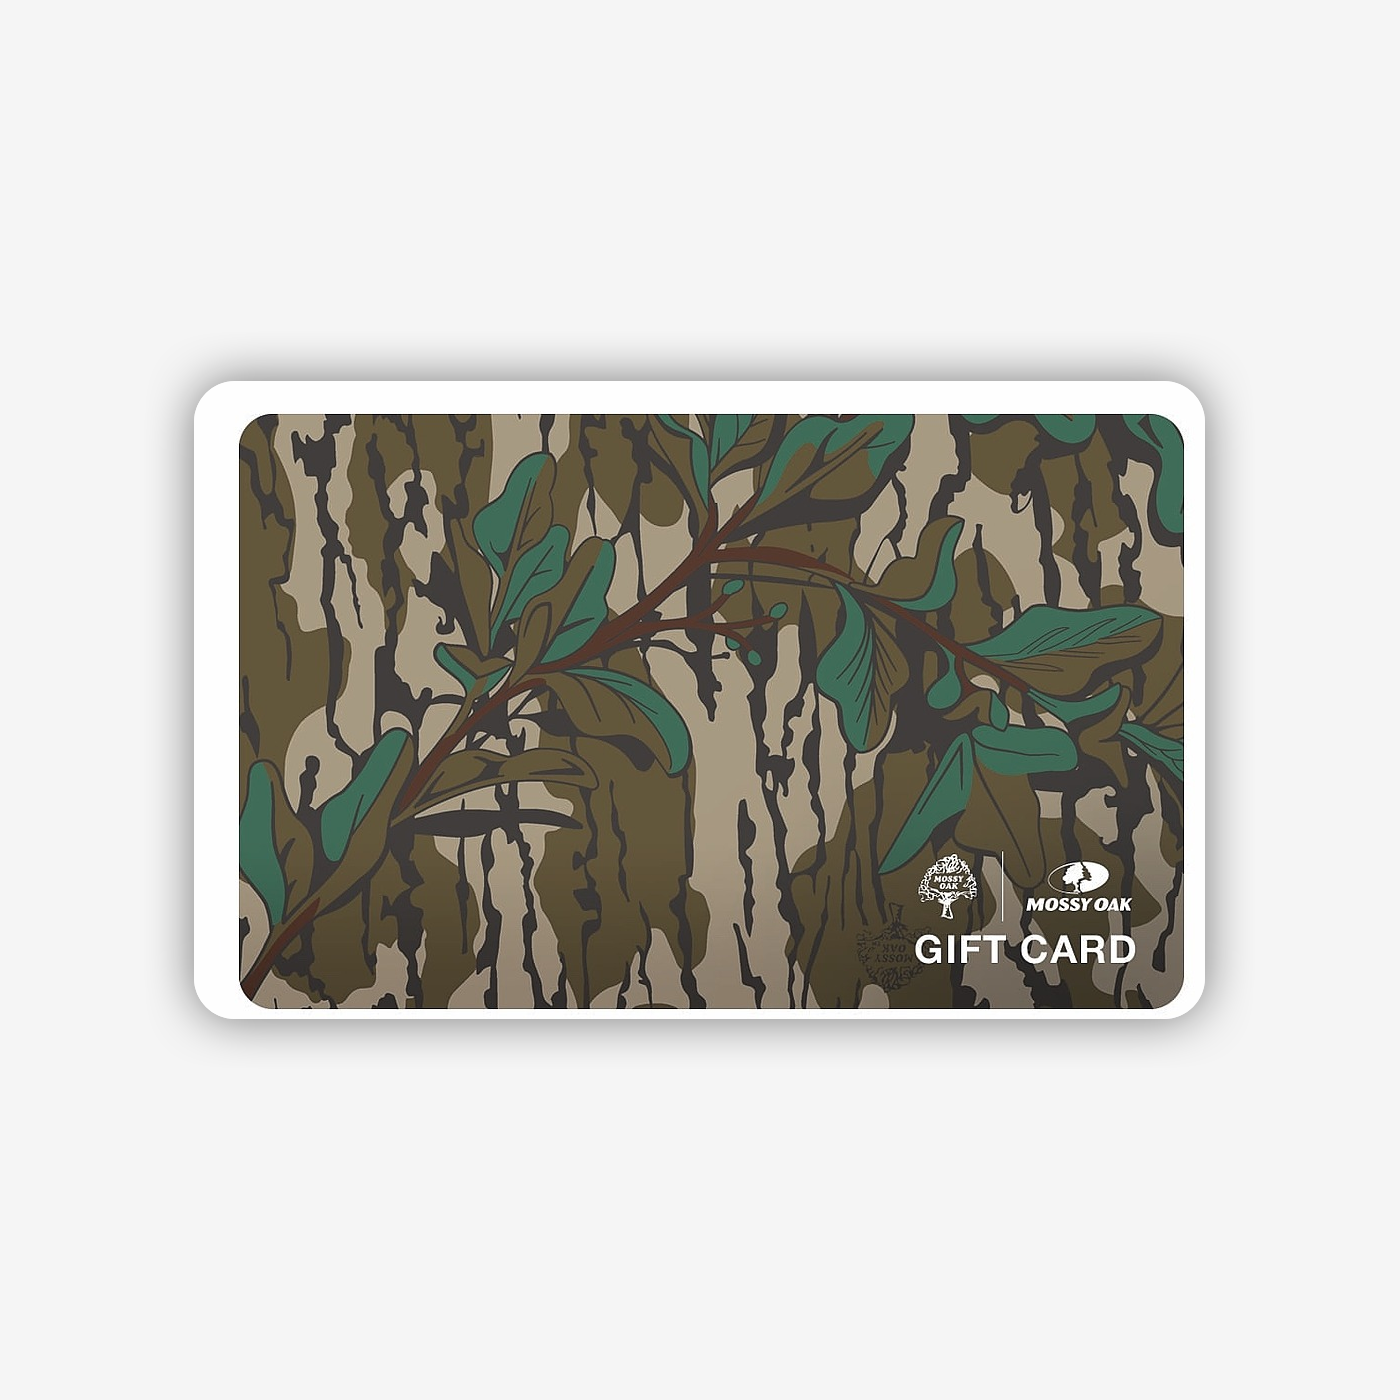 Greenleaf camo pattern gift card.